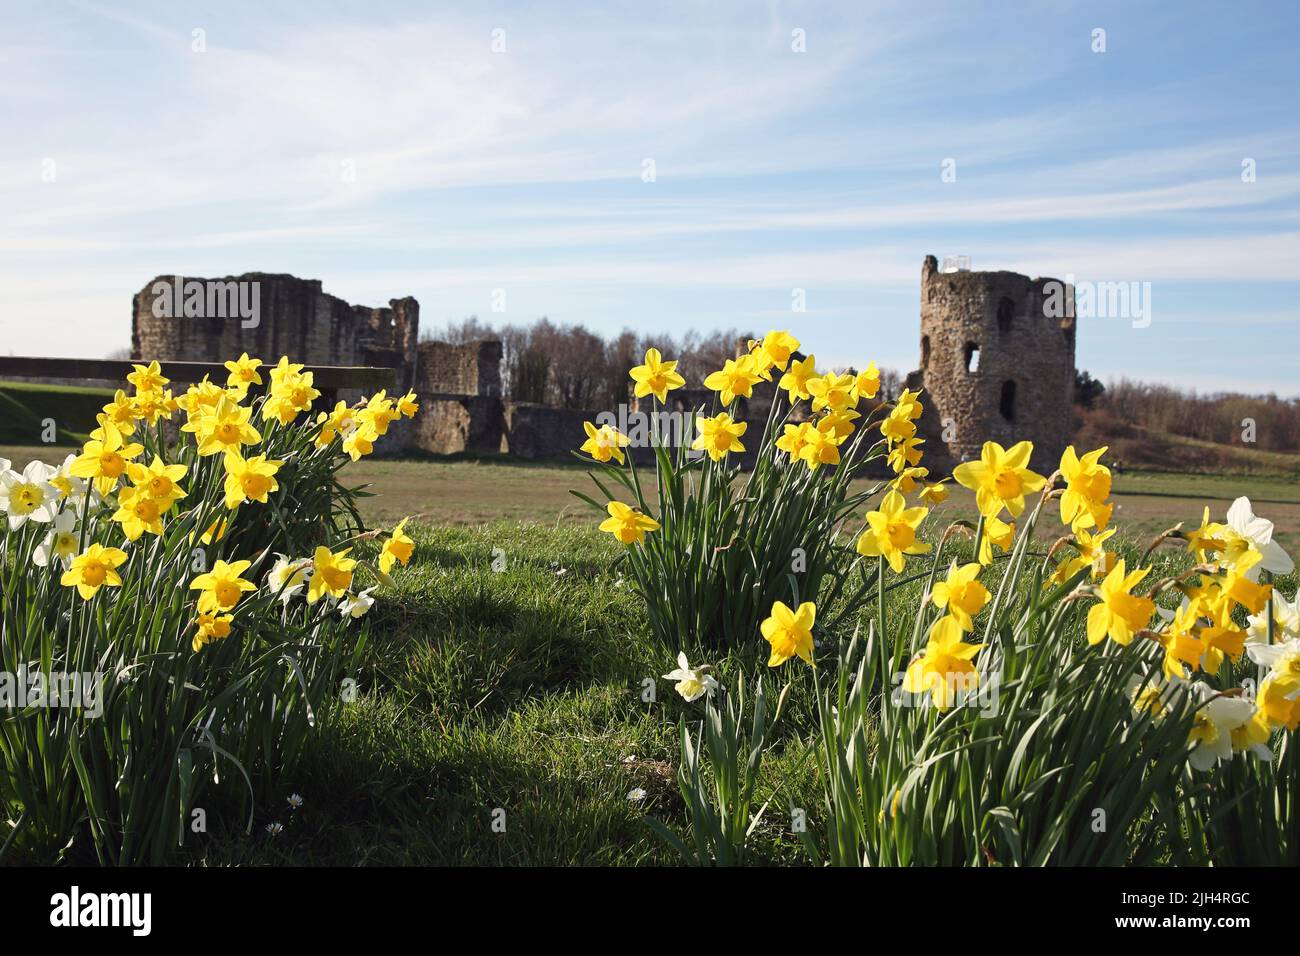 Flint Castle, Flintshire, North Wales Stock Photo